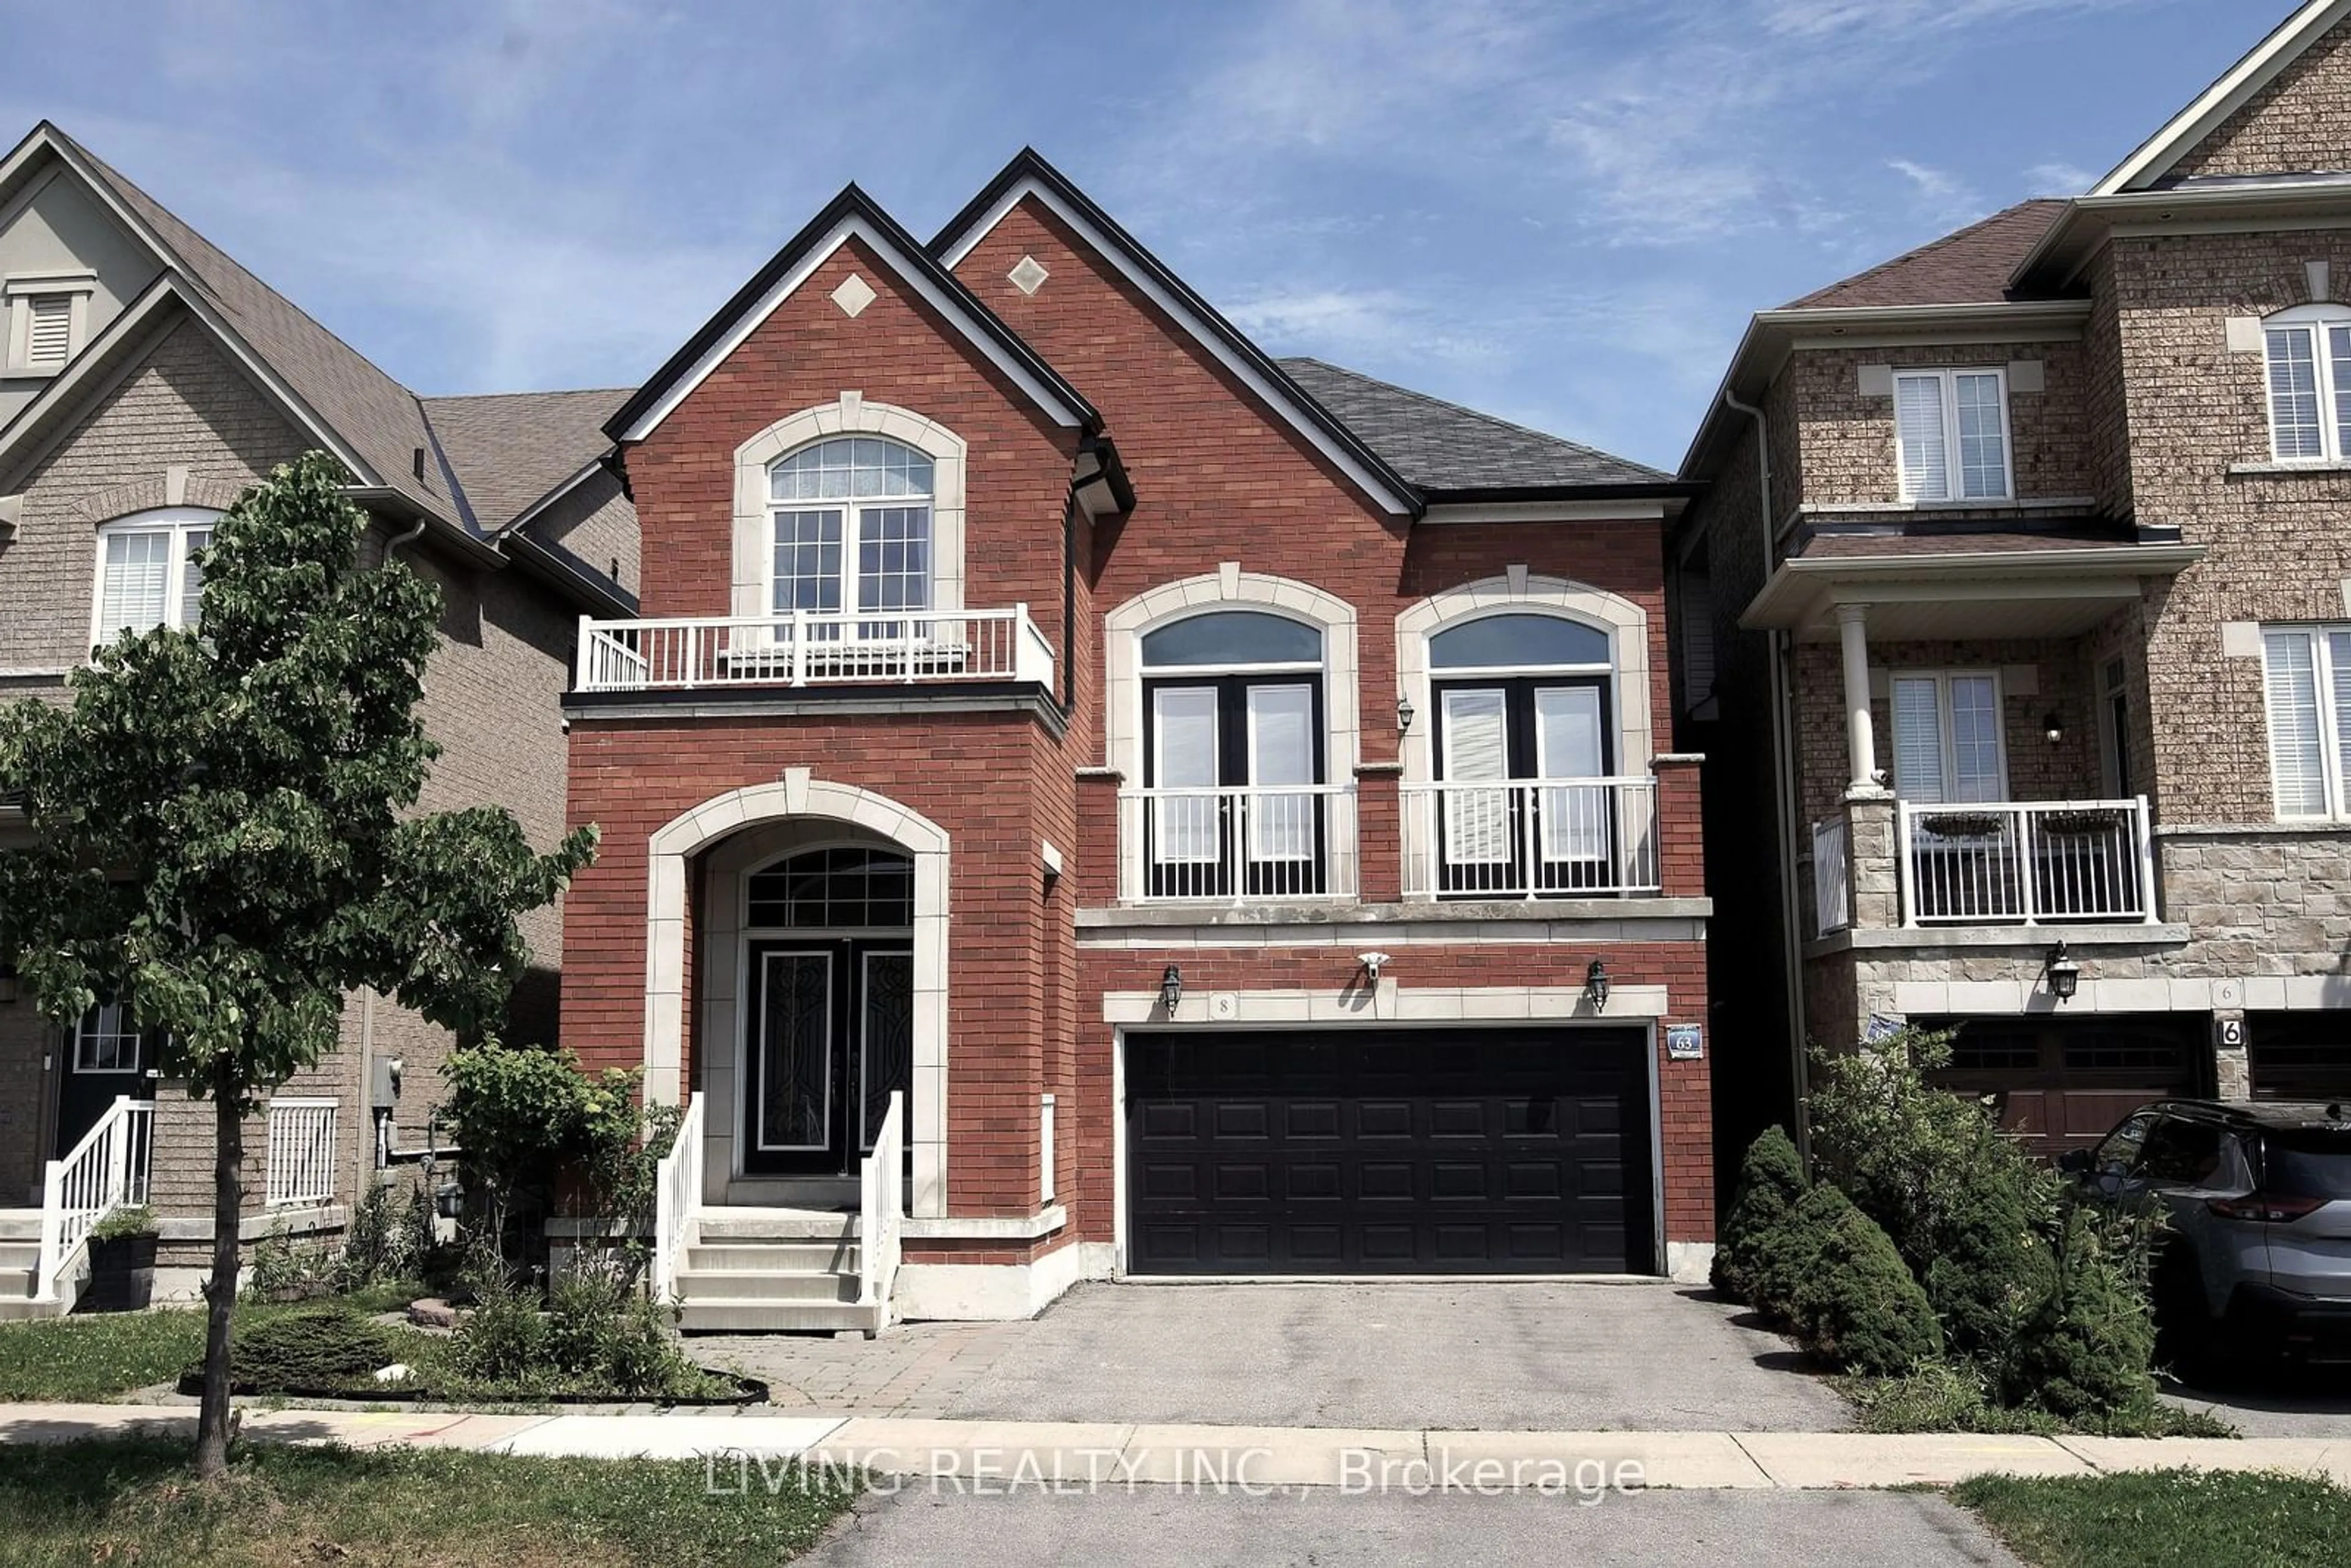 Home with brick exterior material for 8 Stockbridge Ave, Richmond Hill Ontario L4E 0R9